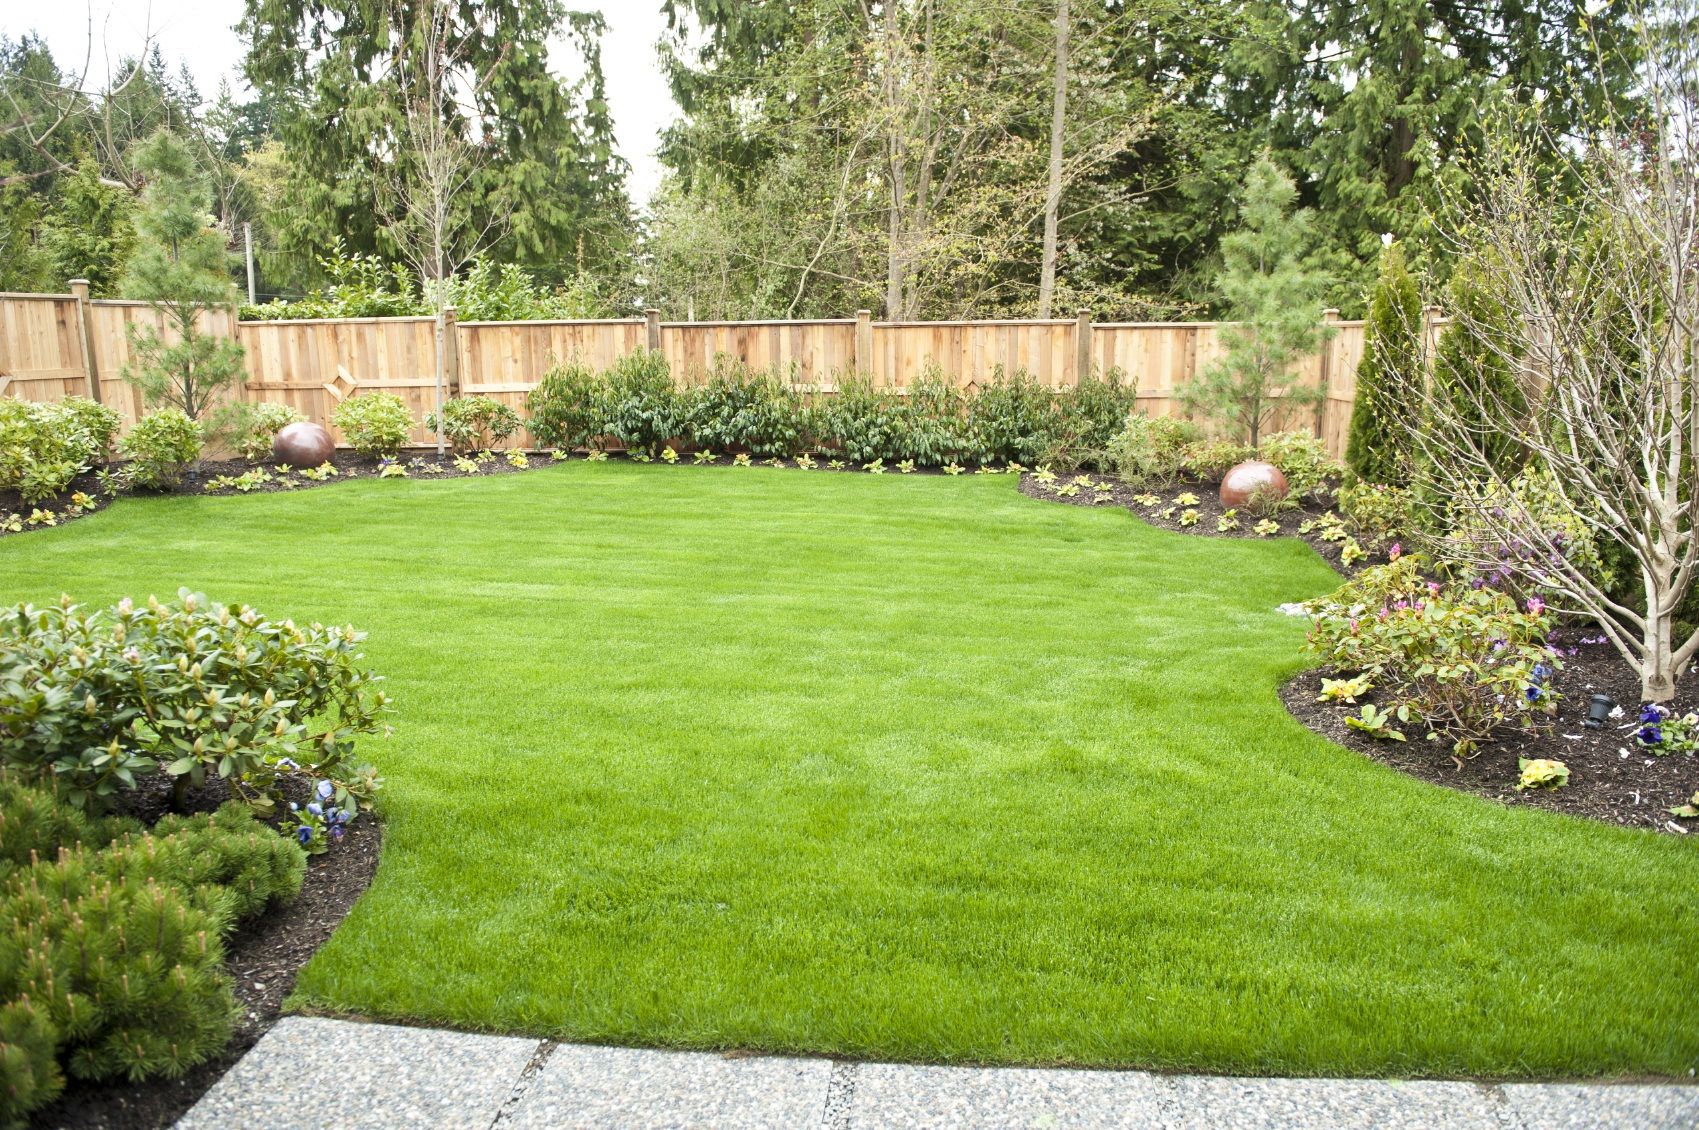 Image of grassy backyard